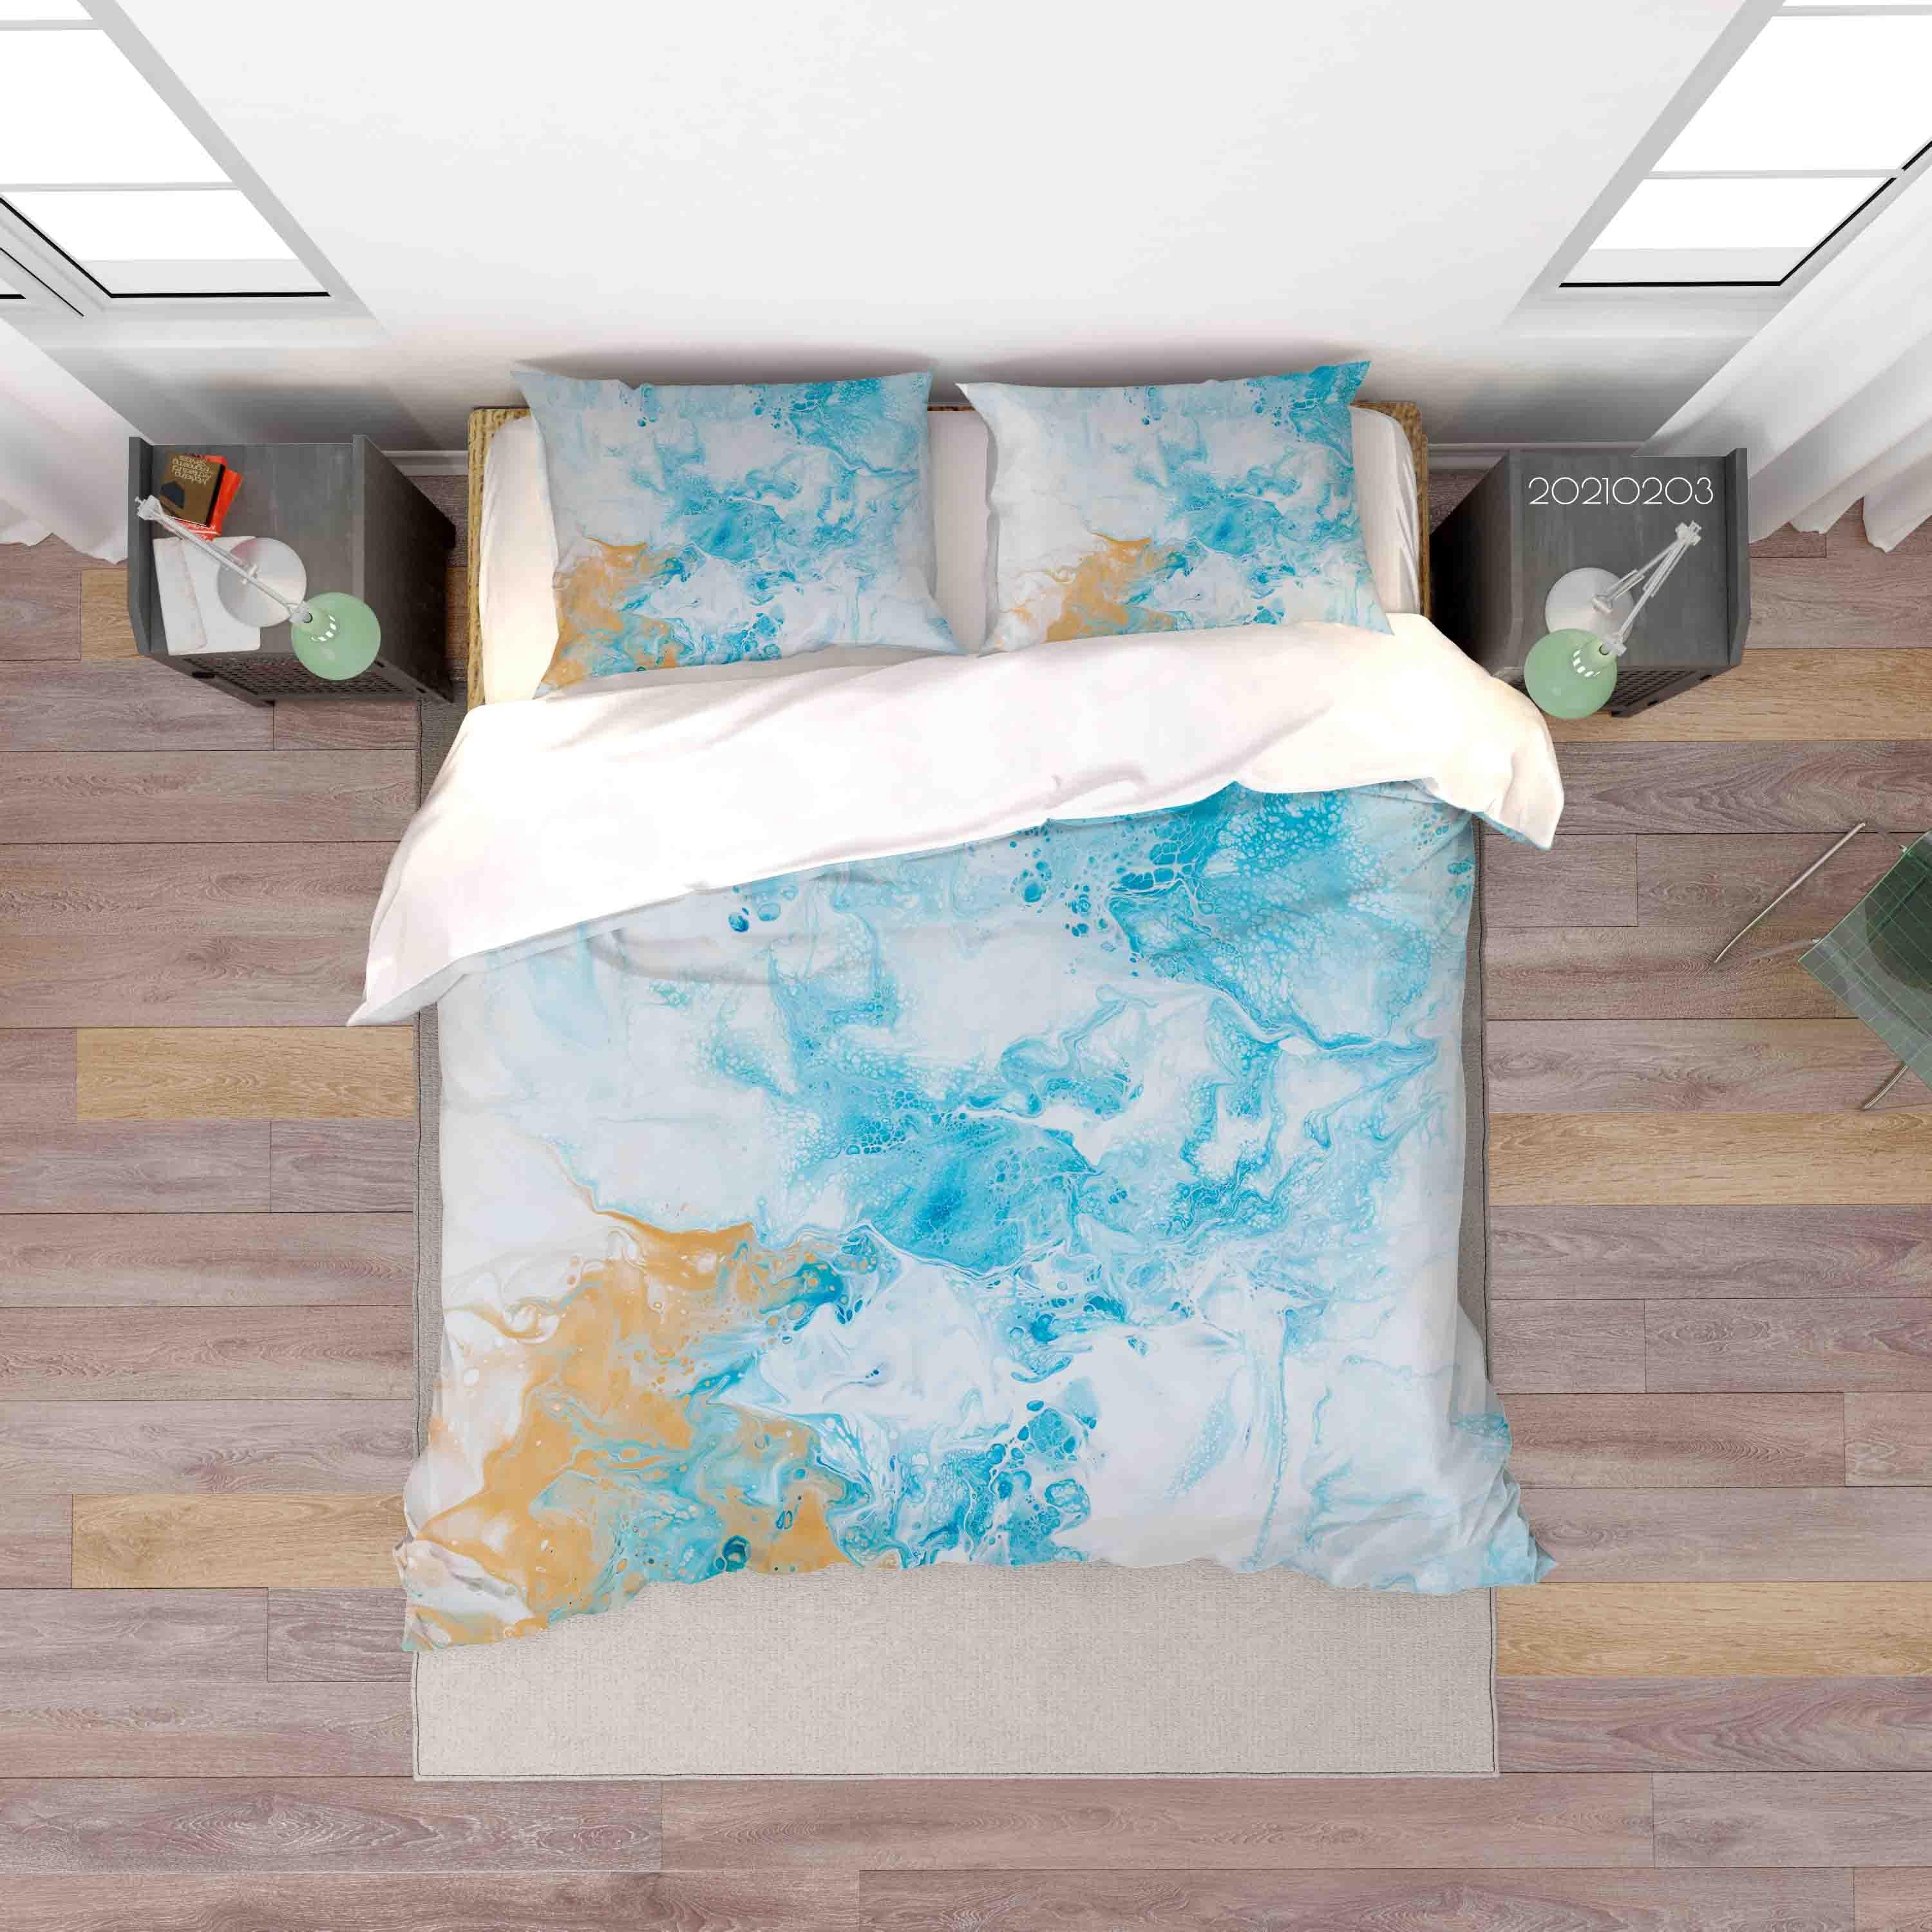 3D Abstract Blue Marble Texture Quilt Cover Set Bedding Set Duvet Cover Pillowcases 97- Jess Art Decoration